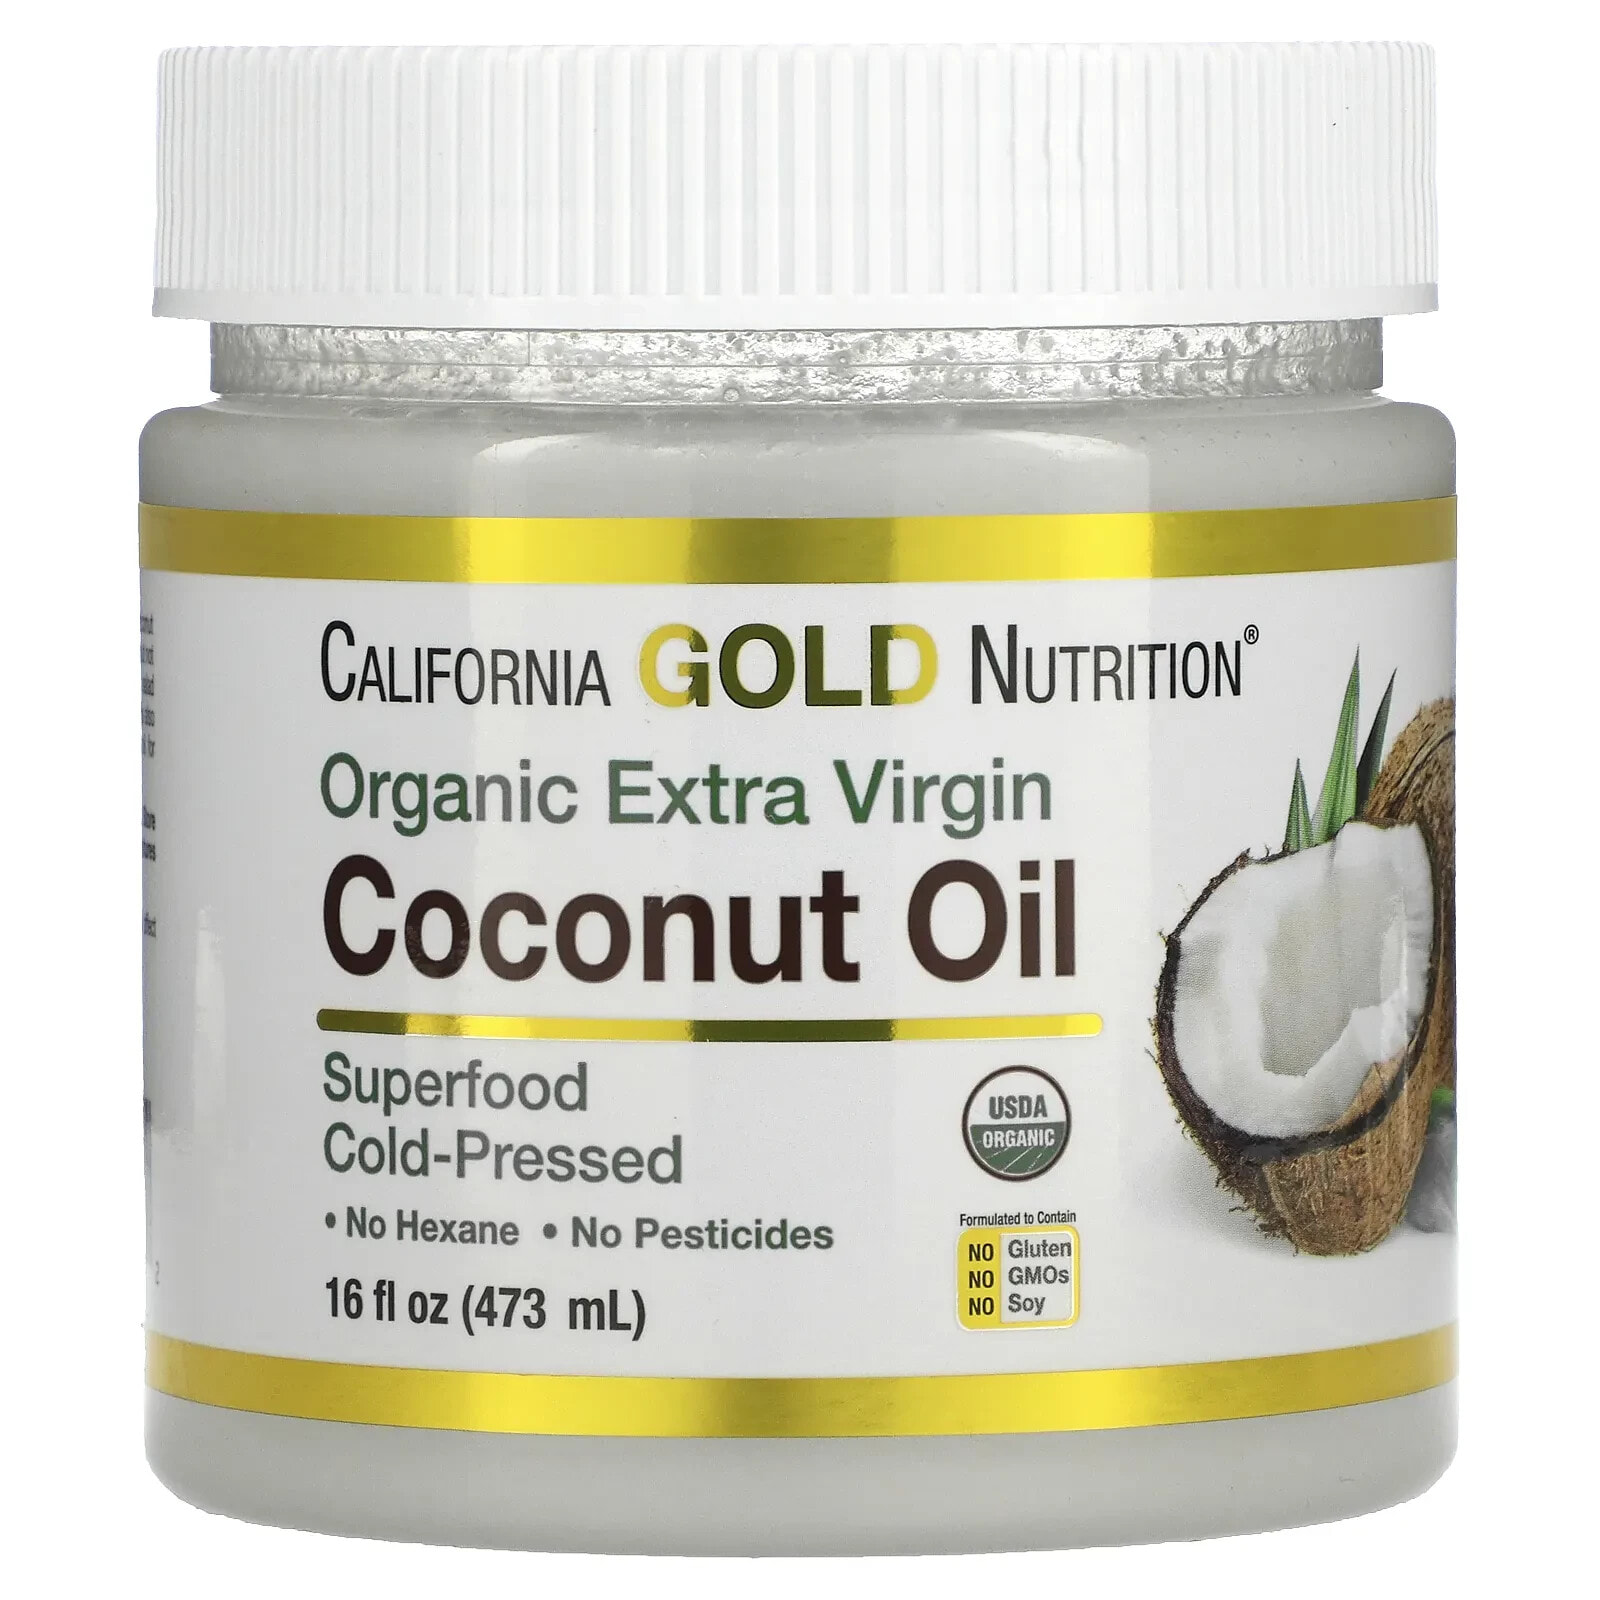 SUPERFOODS - Cold Pressed Organic Virgin Coconut Oil, 16 fl oz (473 ml)